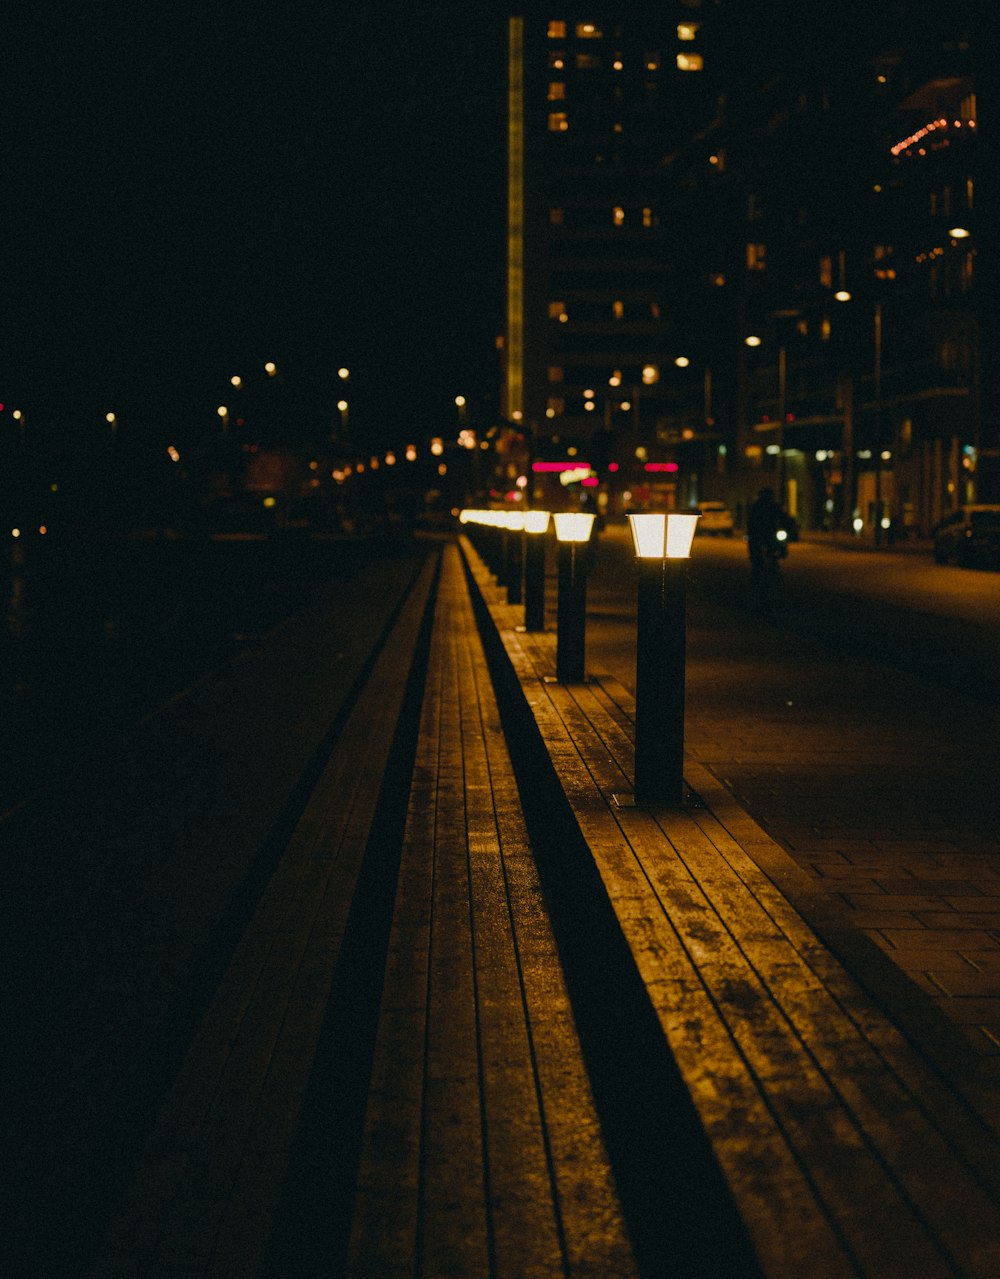 a person walking on a sidewalk at night